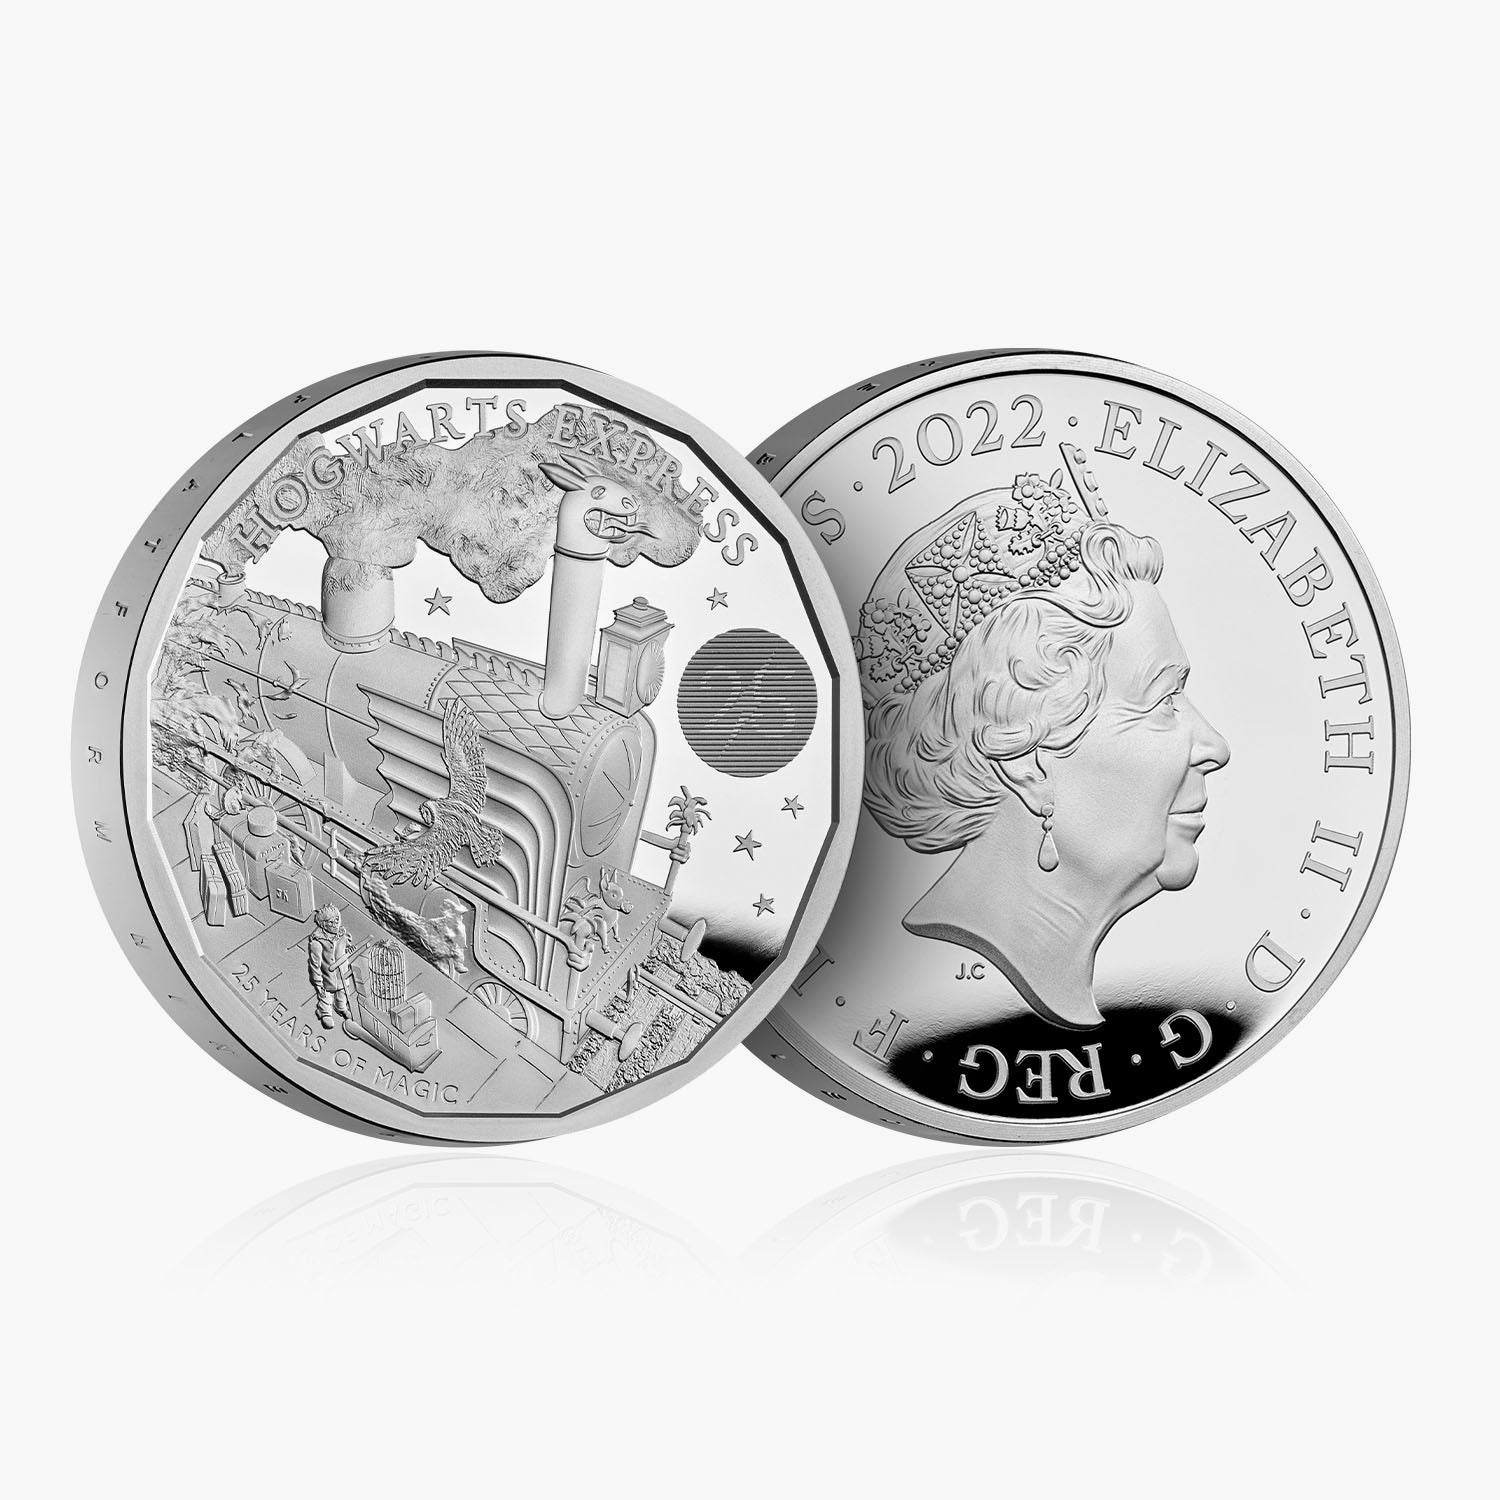 Harry Potter - Hogwarts Express 2022 UK 1oz Silver Proof Coin